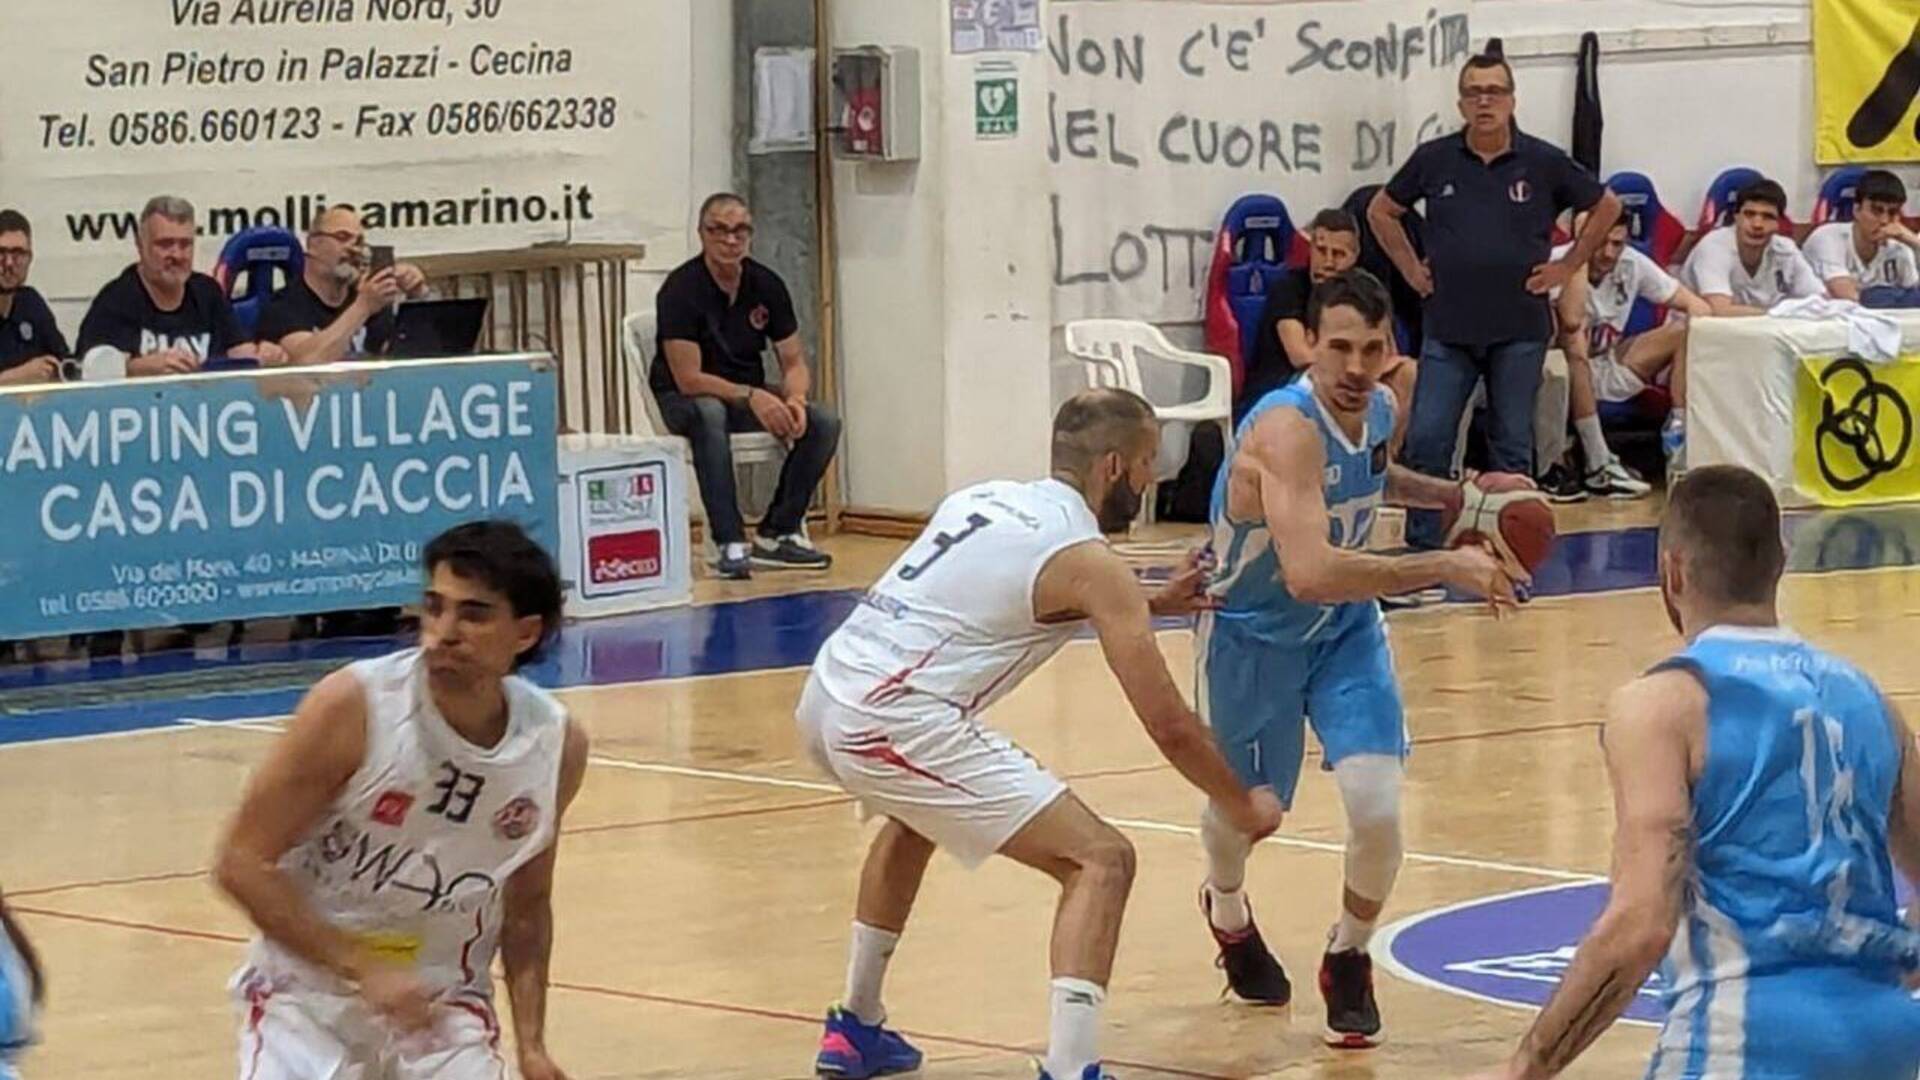 Basket, Serie B finale playoff : ieri all’AZ Robur Saronno è andata male in Toscana. Ci sarà la bella